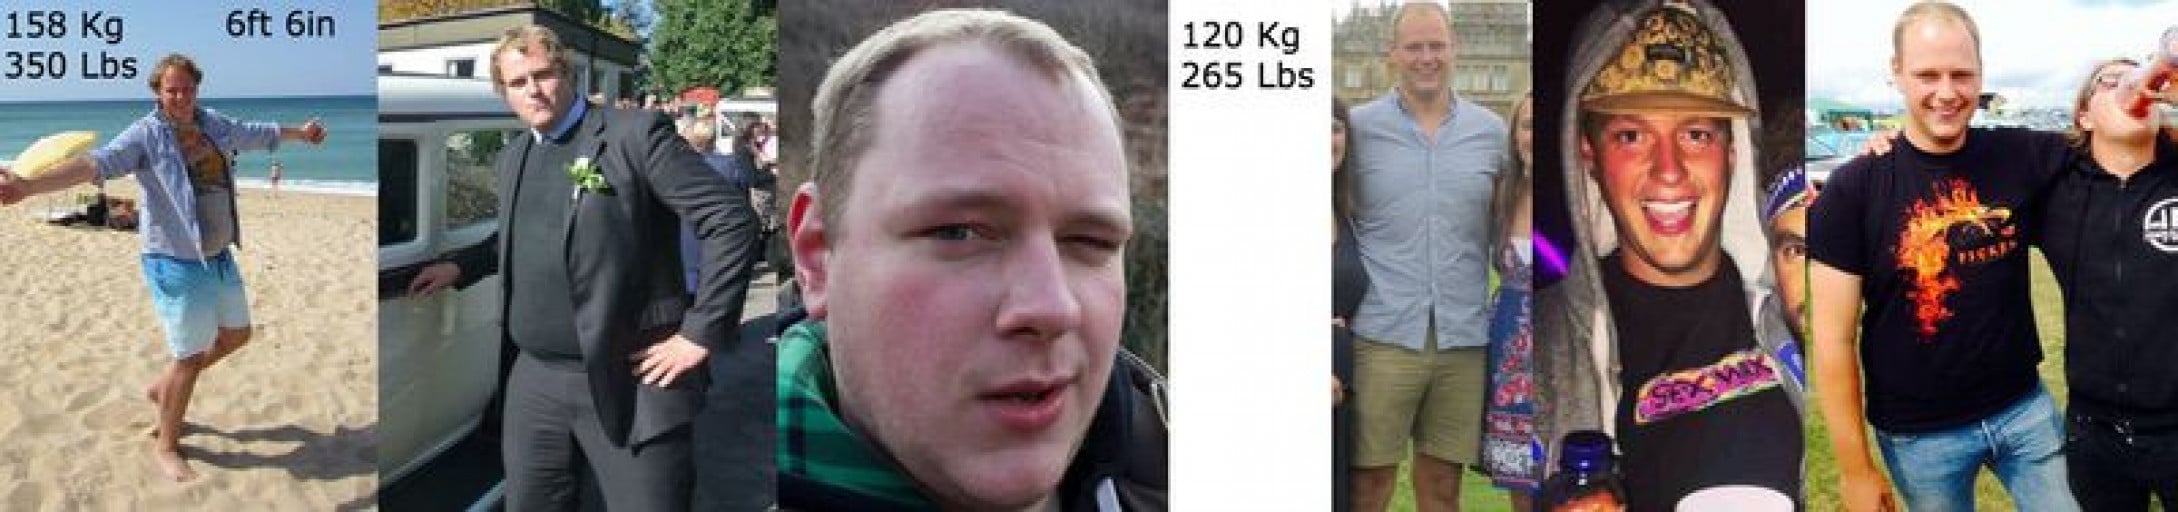 6 foot 6 Male Progress Pics of 85 lbs Weight Loss 350 lbs to 265 lbs